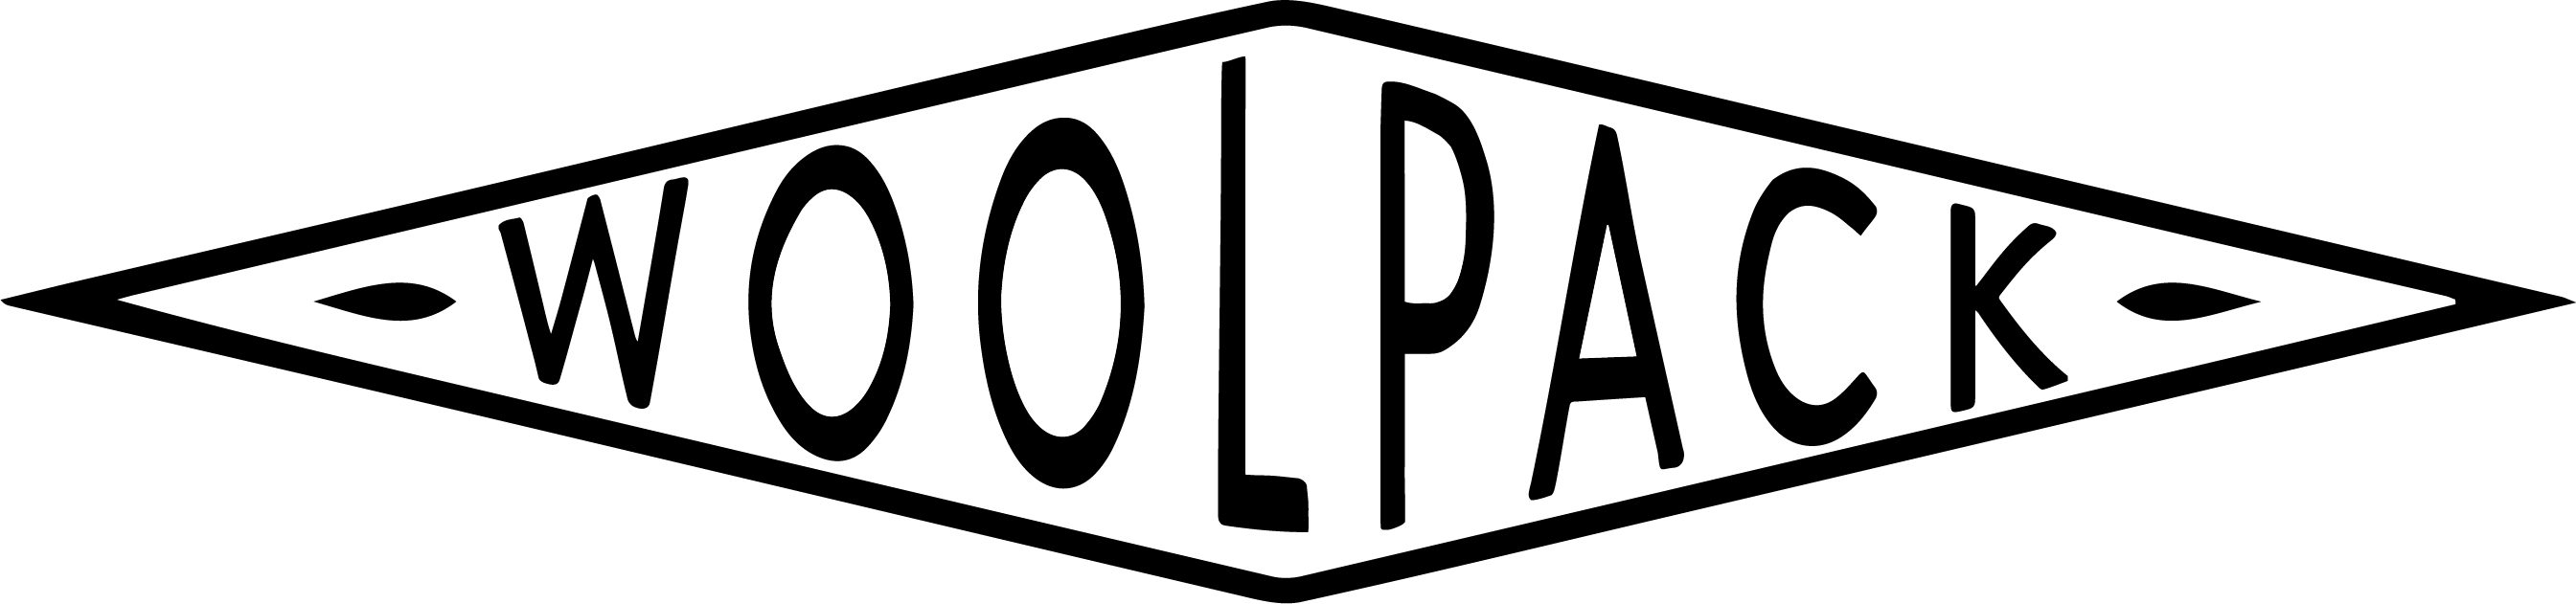 Woolpack Diamond Logo